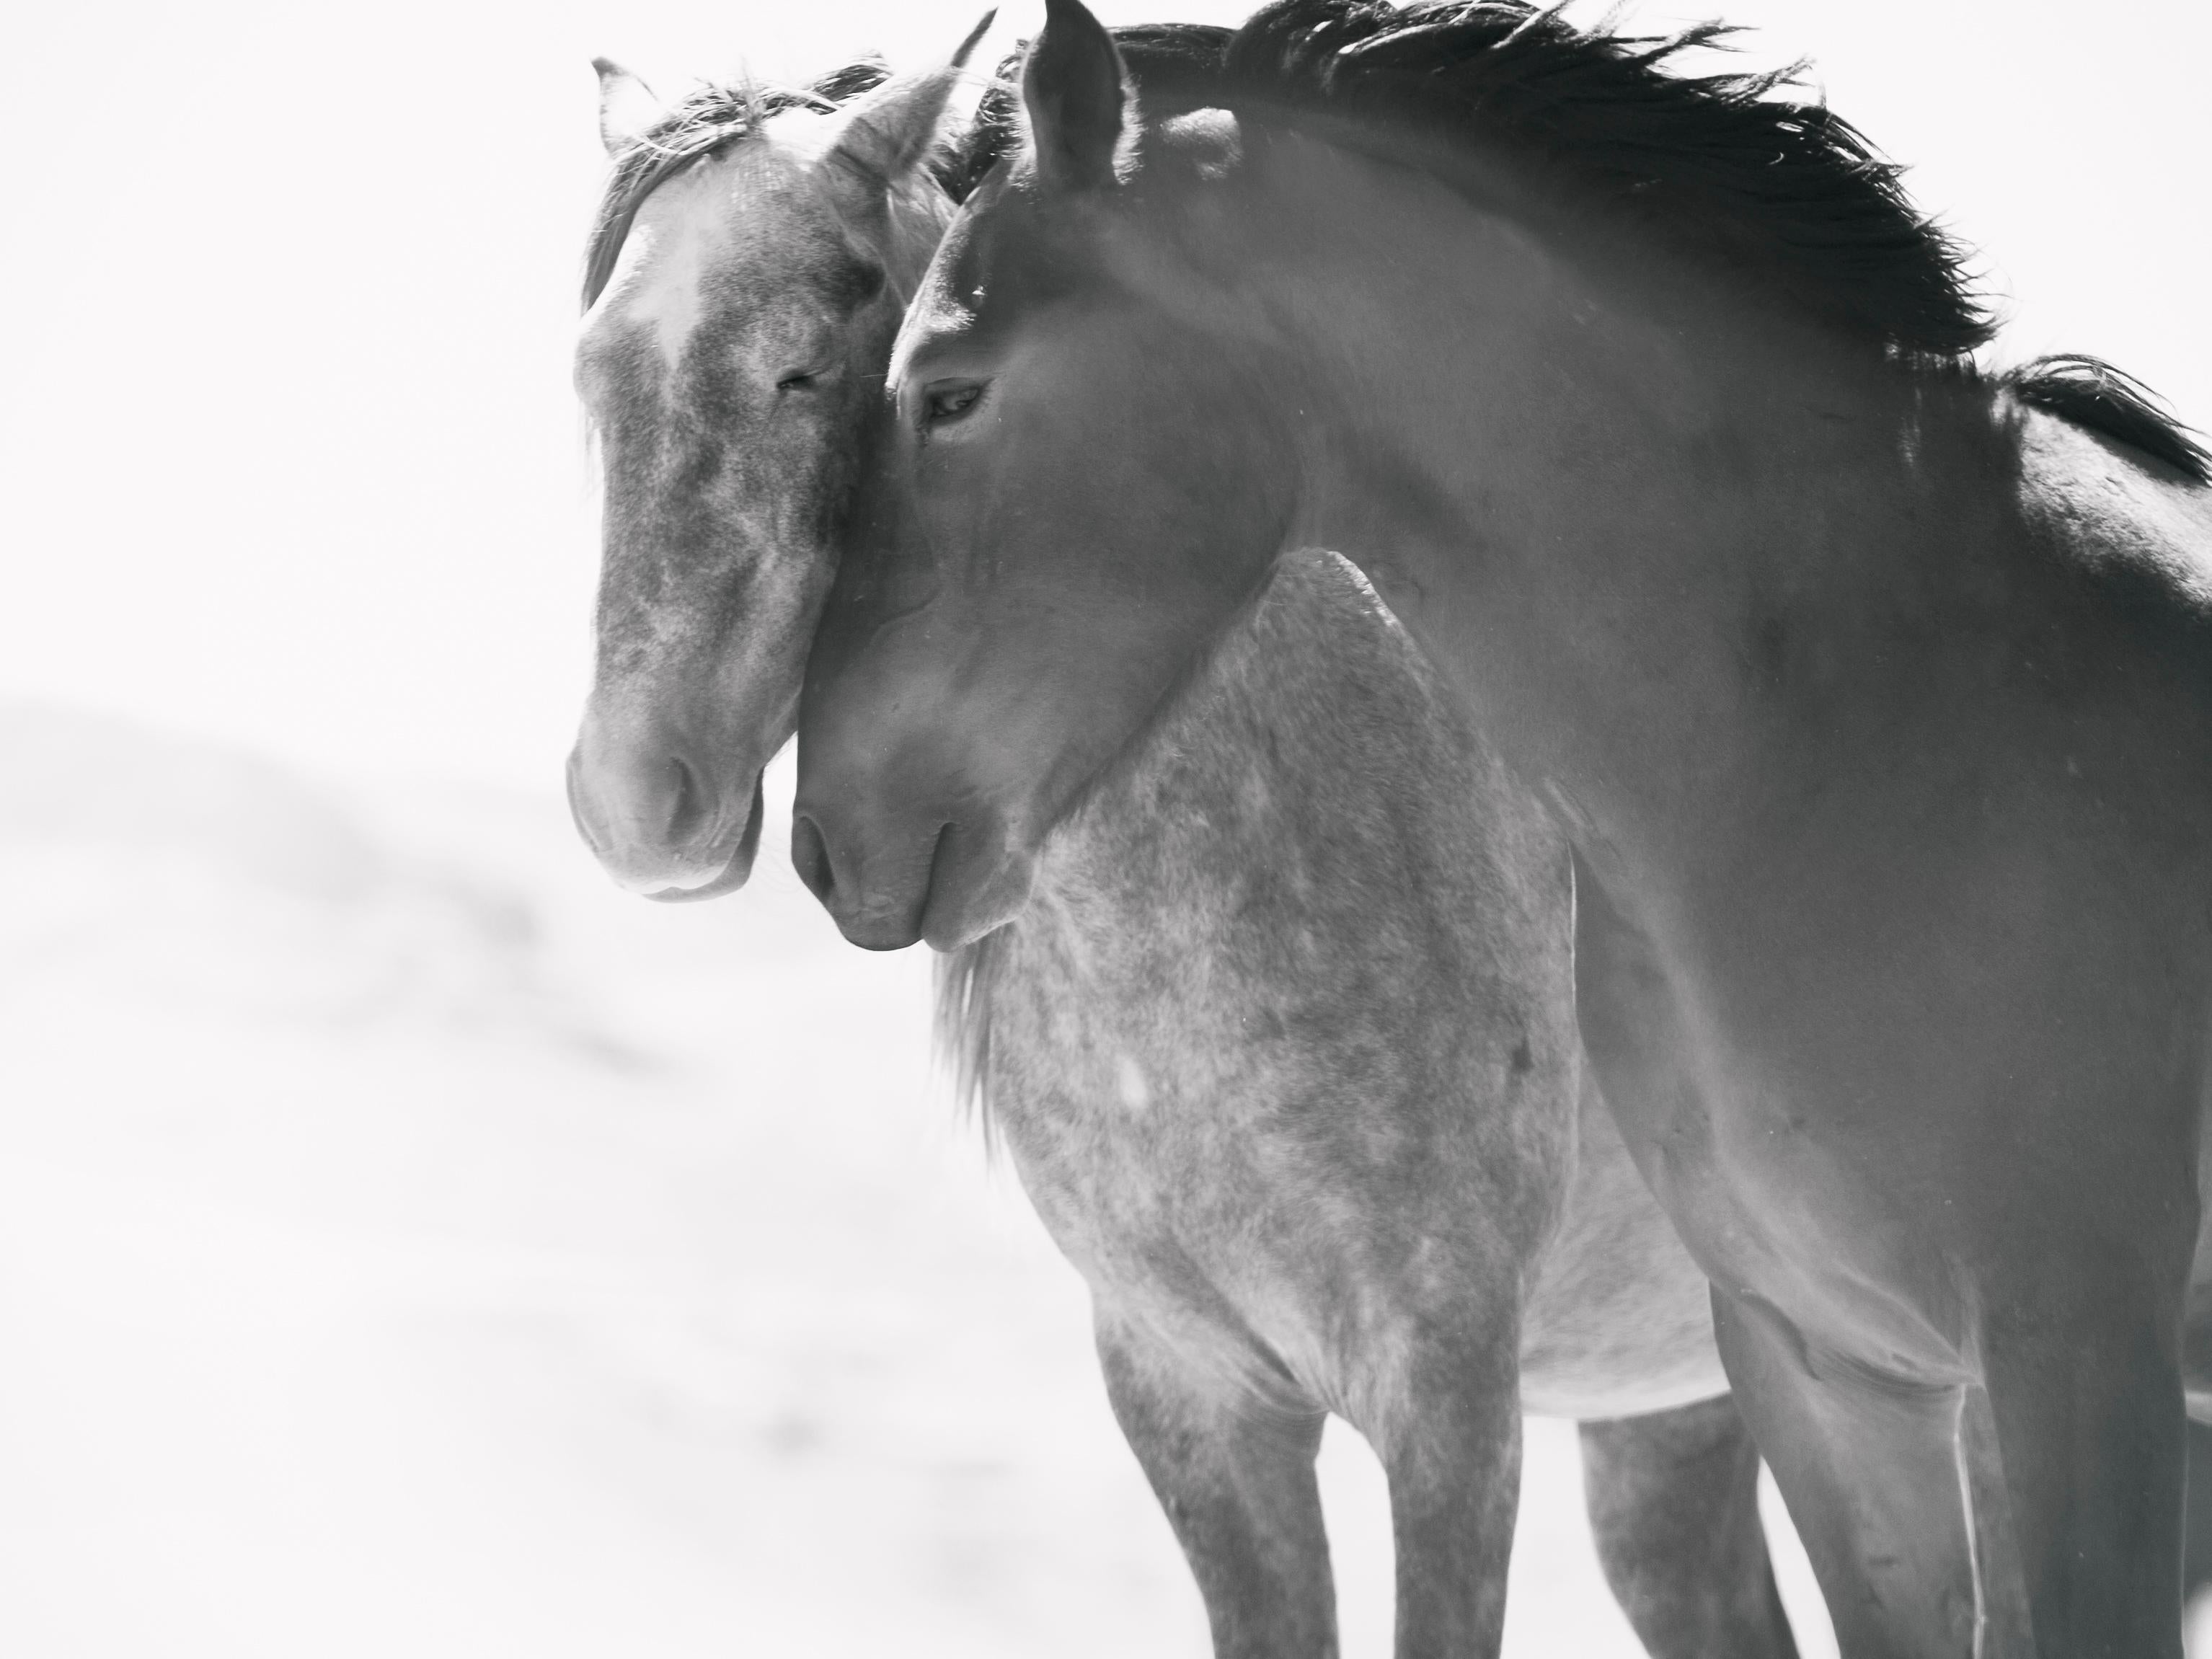 Black and White Photograph Shane Russeck - "Soulmates" 30x40  Photographie en noir et blanc  Chevaux sauvages Mustangs Photographie 